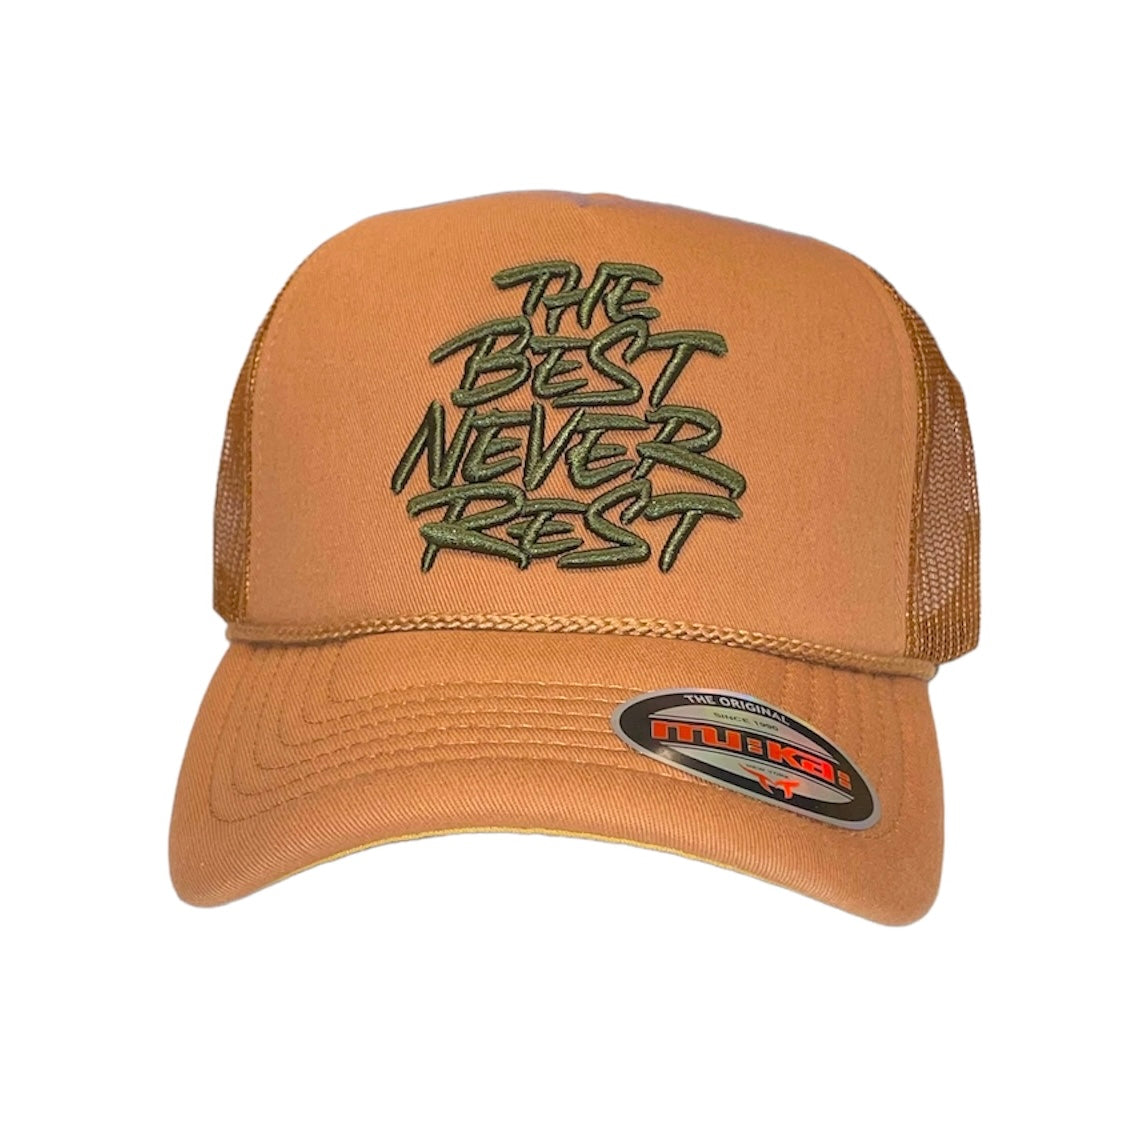 The Best Never Rest Trucker Hat